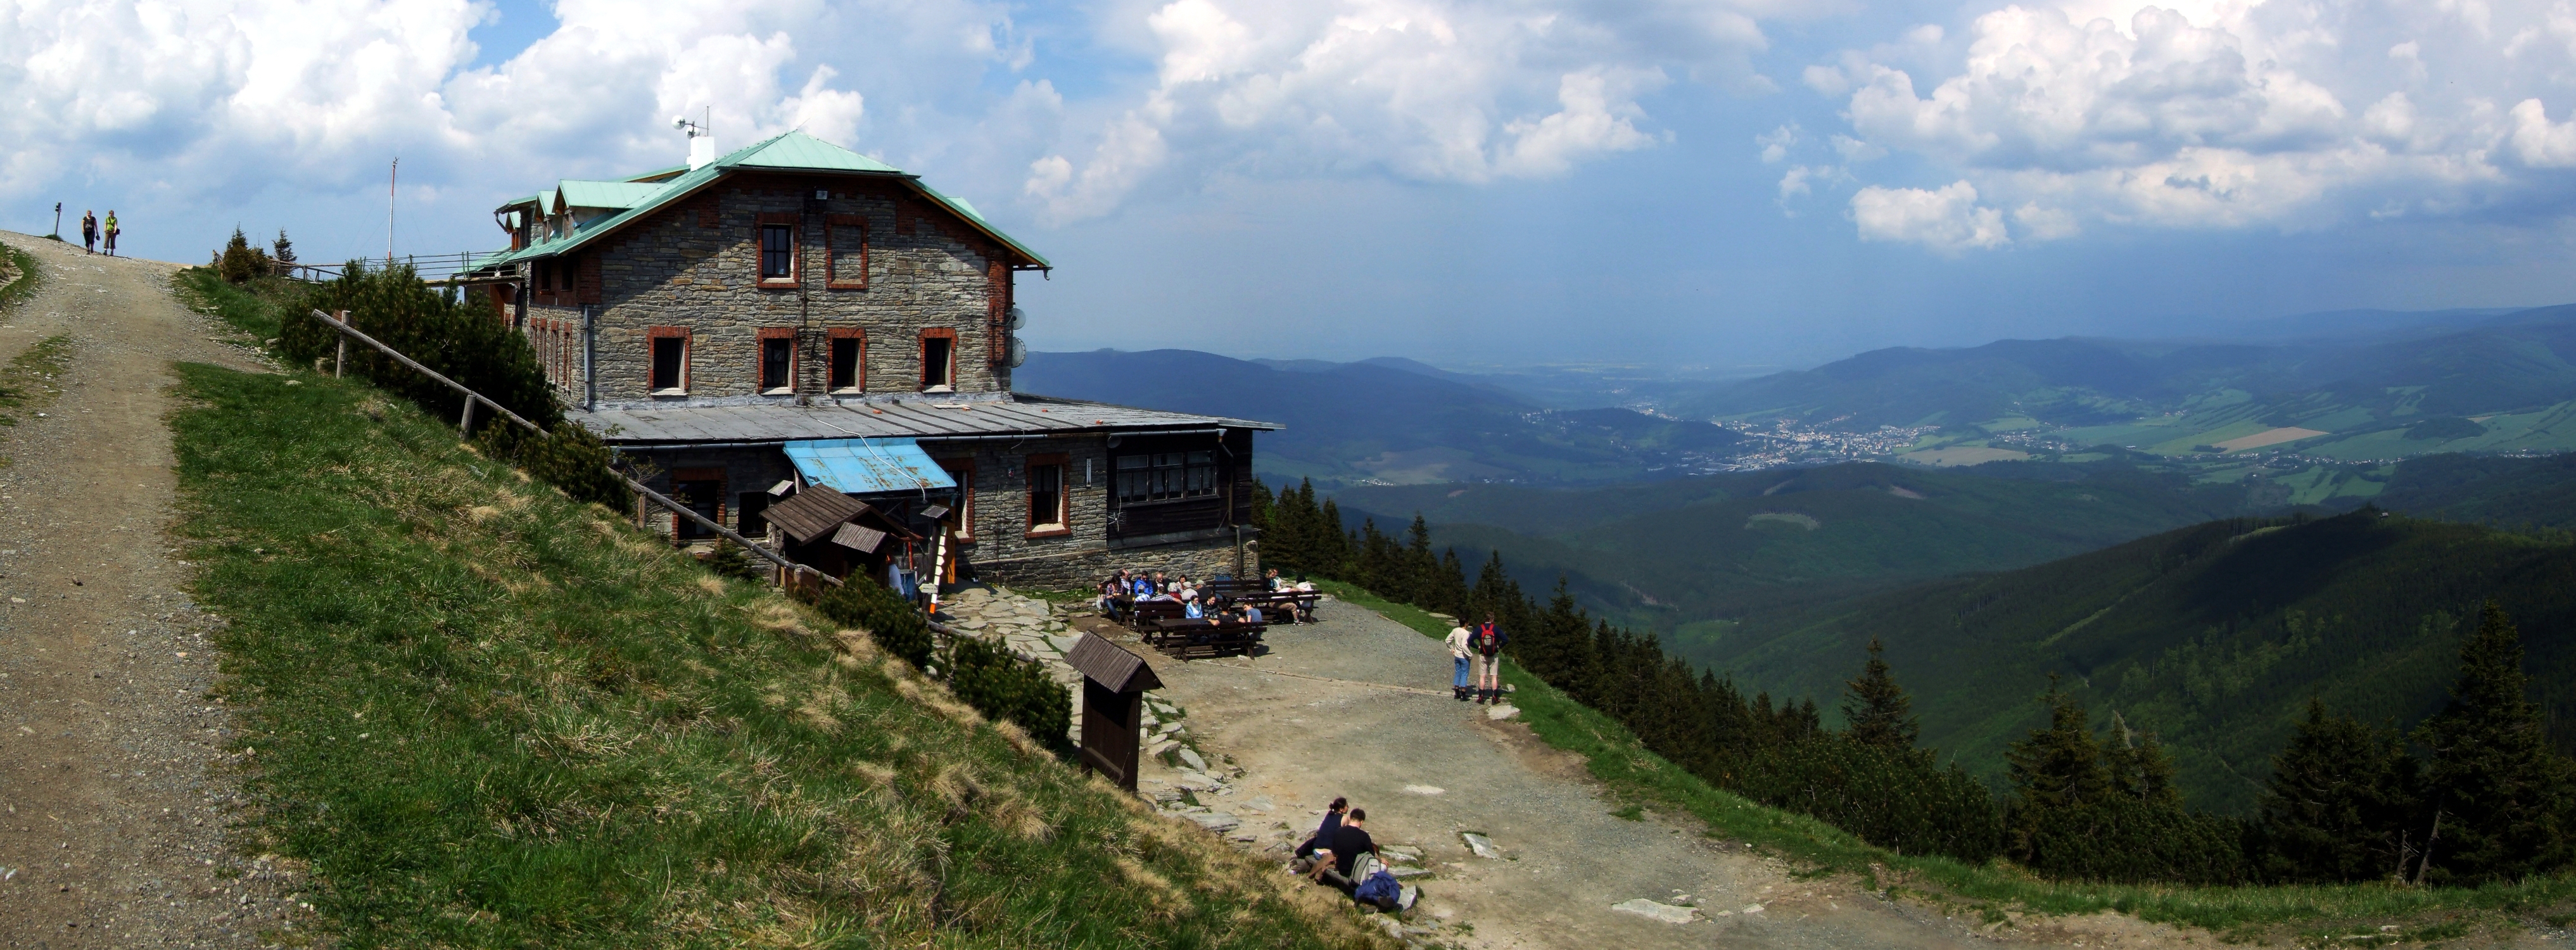 Chata Jiřího na Šeraku - panorama